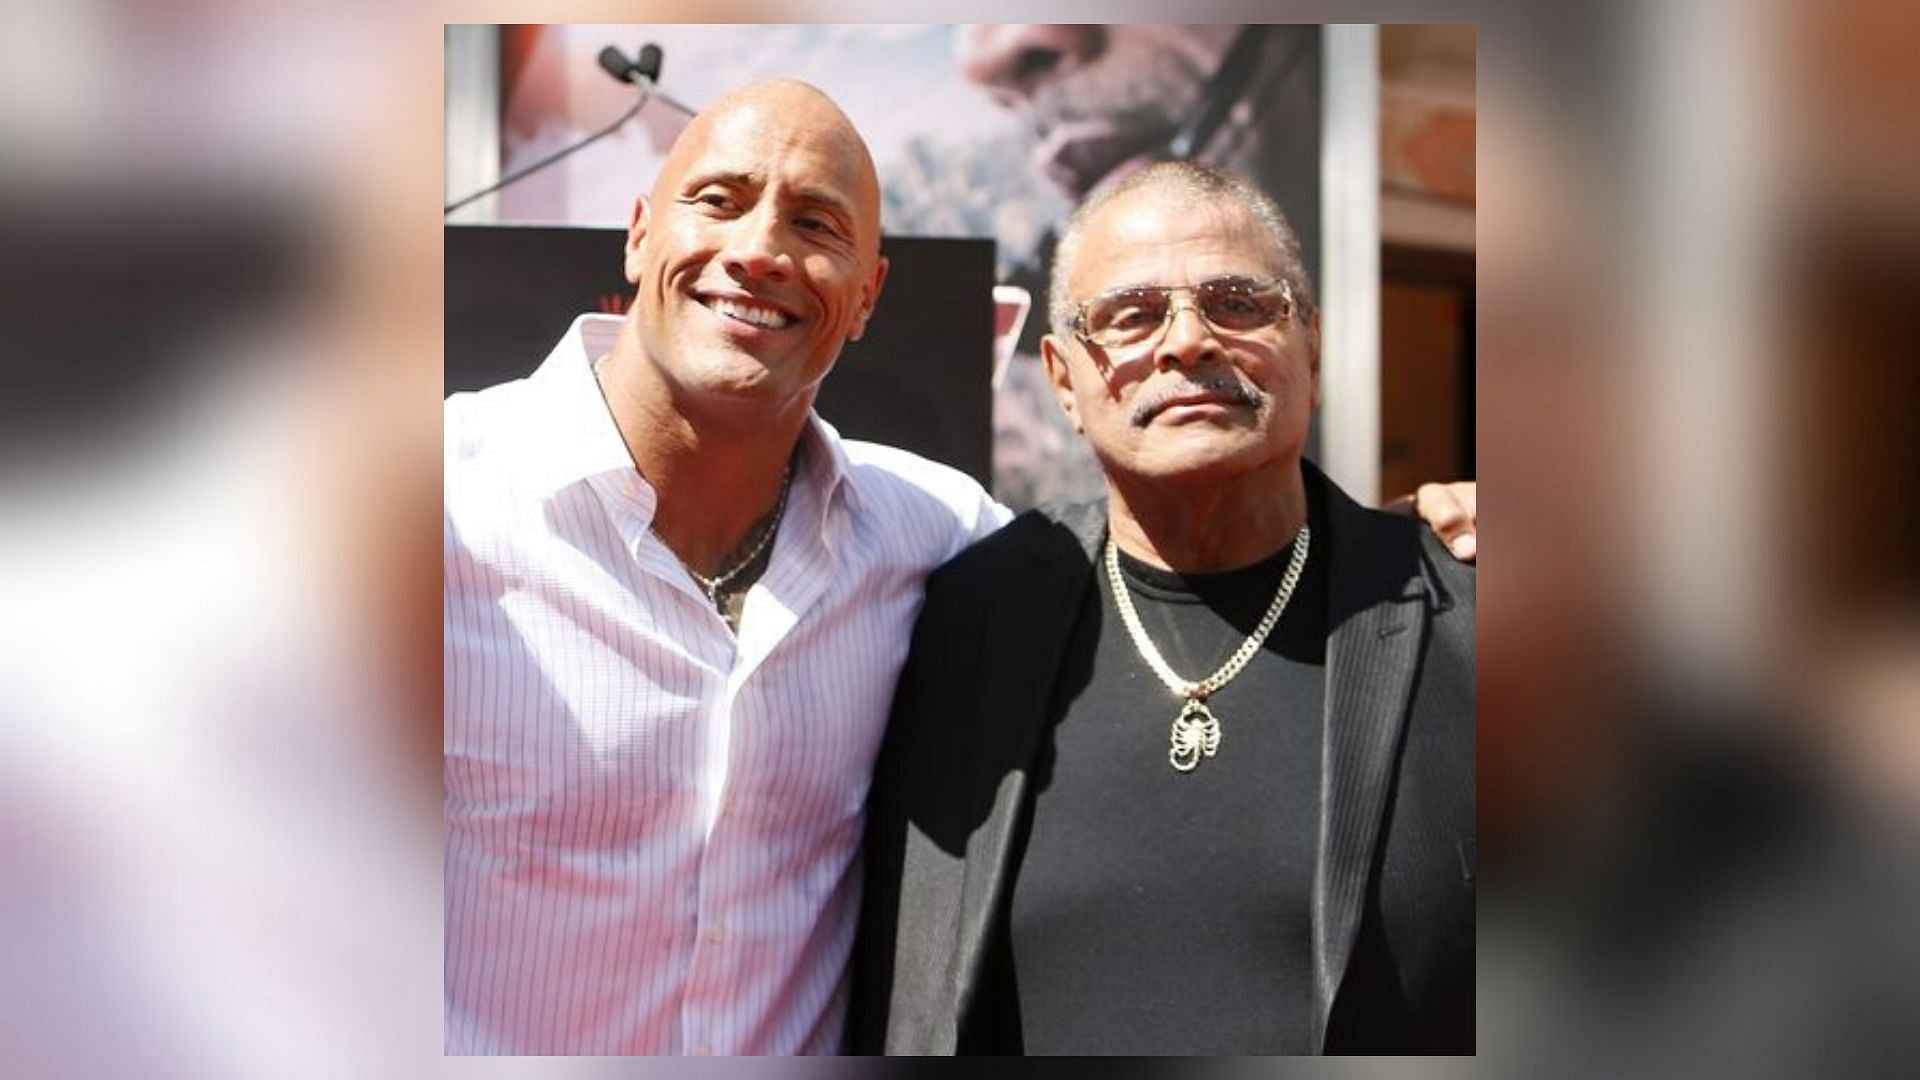 Dwayne Johnson with his father Rocky “Soul Man” Johnson.